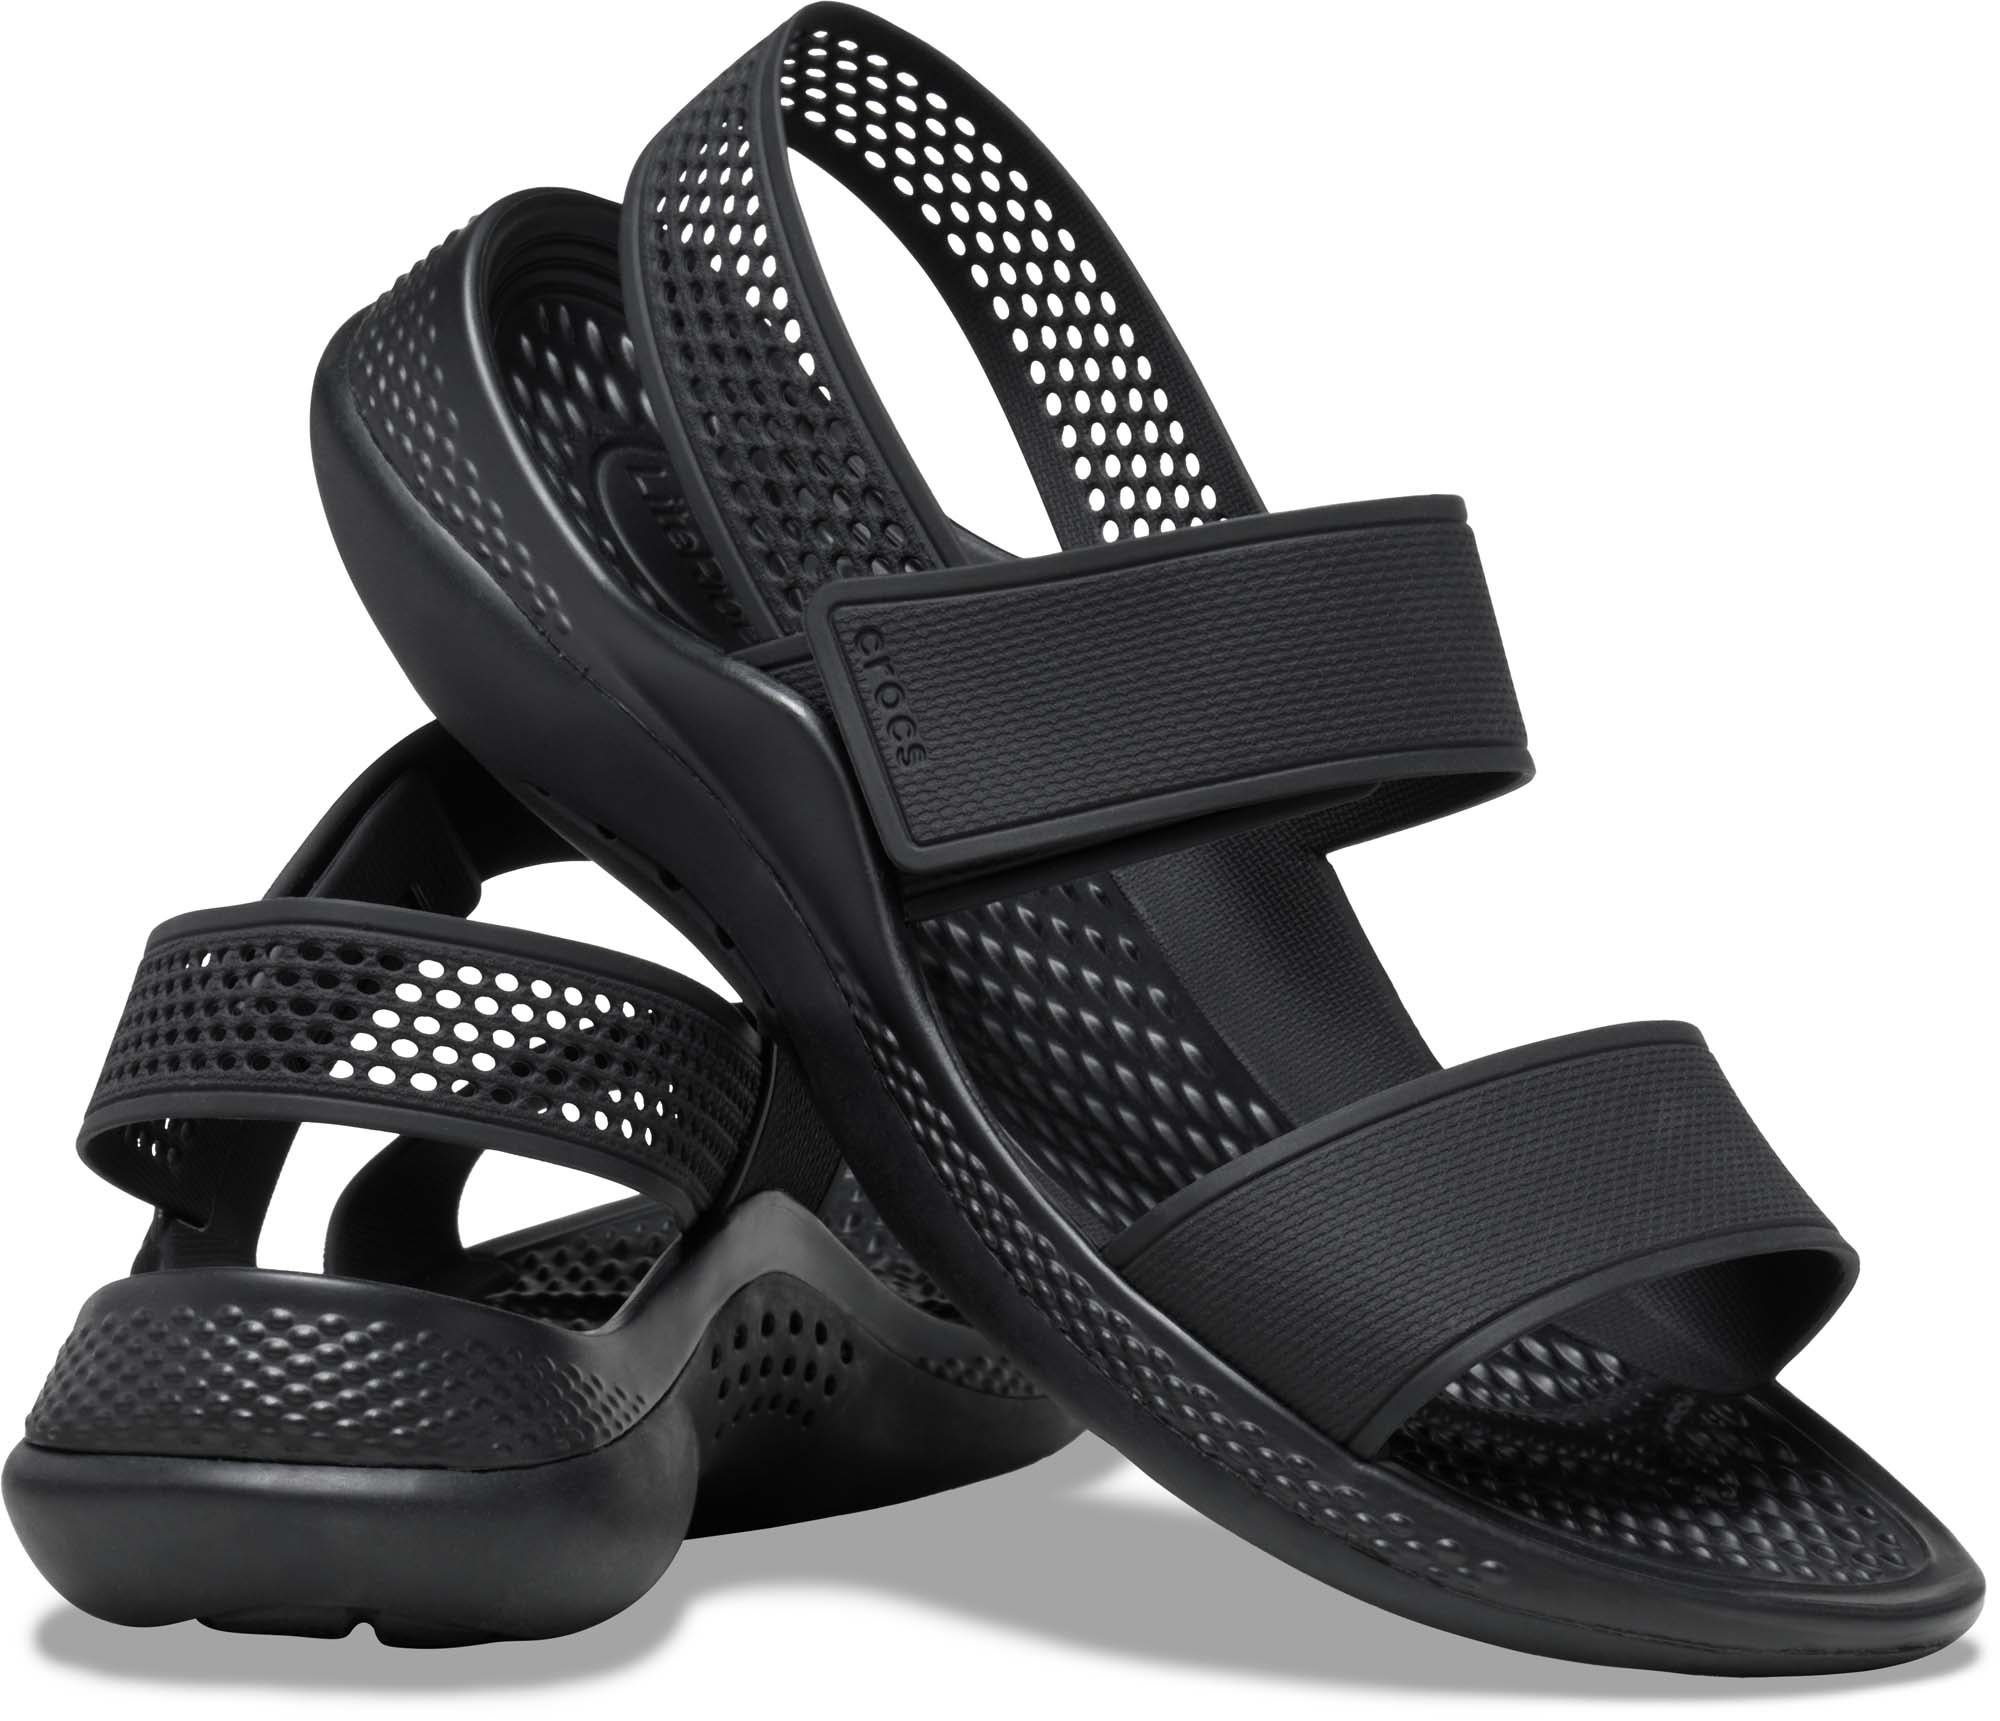 Buyr.com | Sandals | Crocs Unisex-Adult Men's and Women's LiteRide Slide  Sandals, Black/Smoke, 15